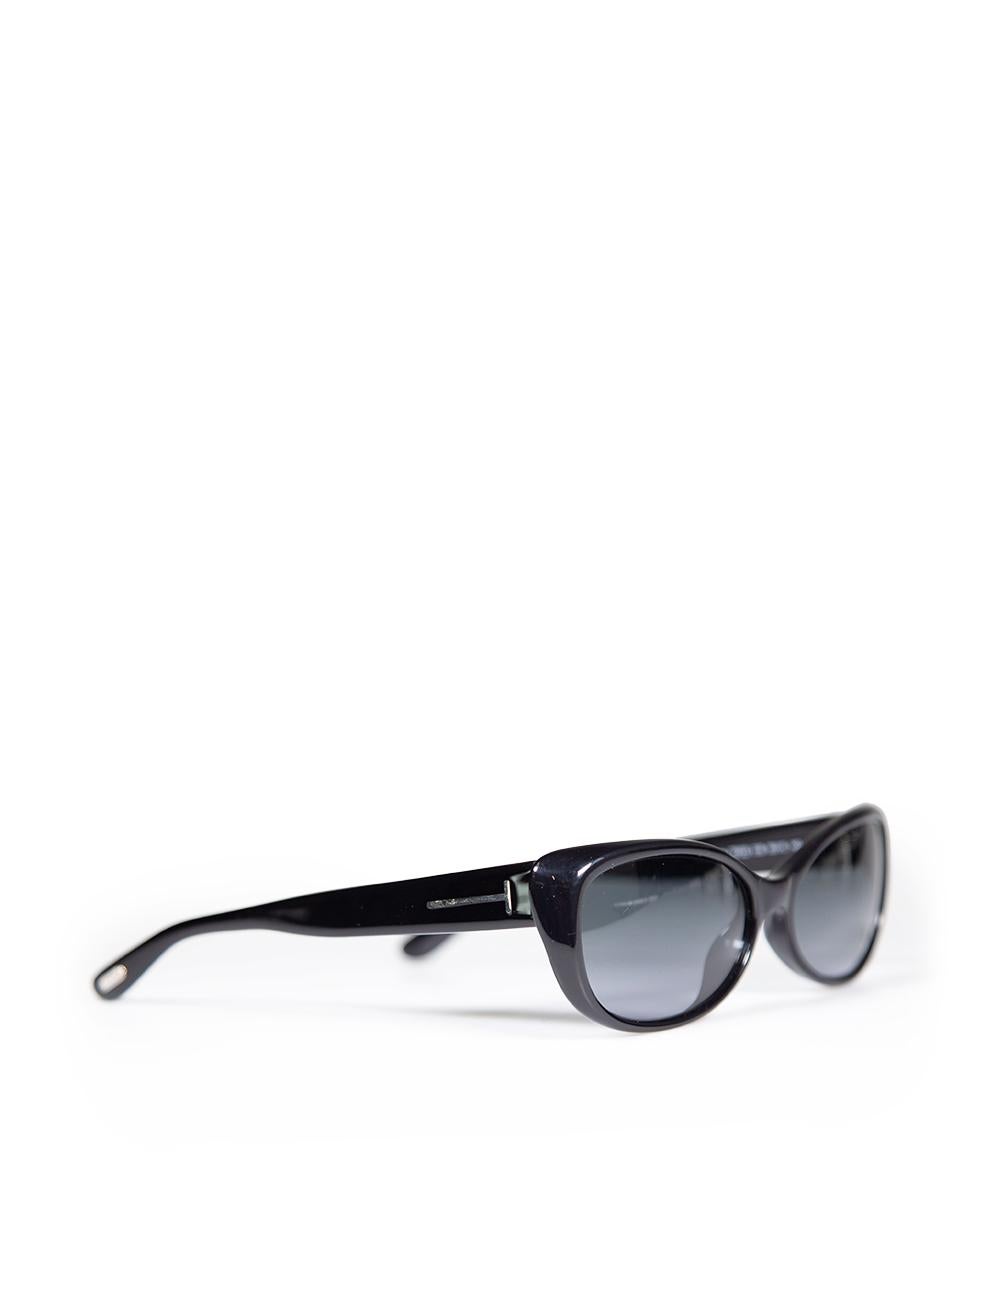 Tom Ford Shiny Black Sebastian Sunglasses In New Condition For Sale In London, GB